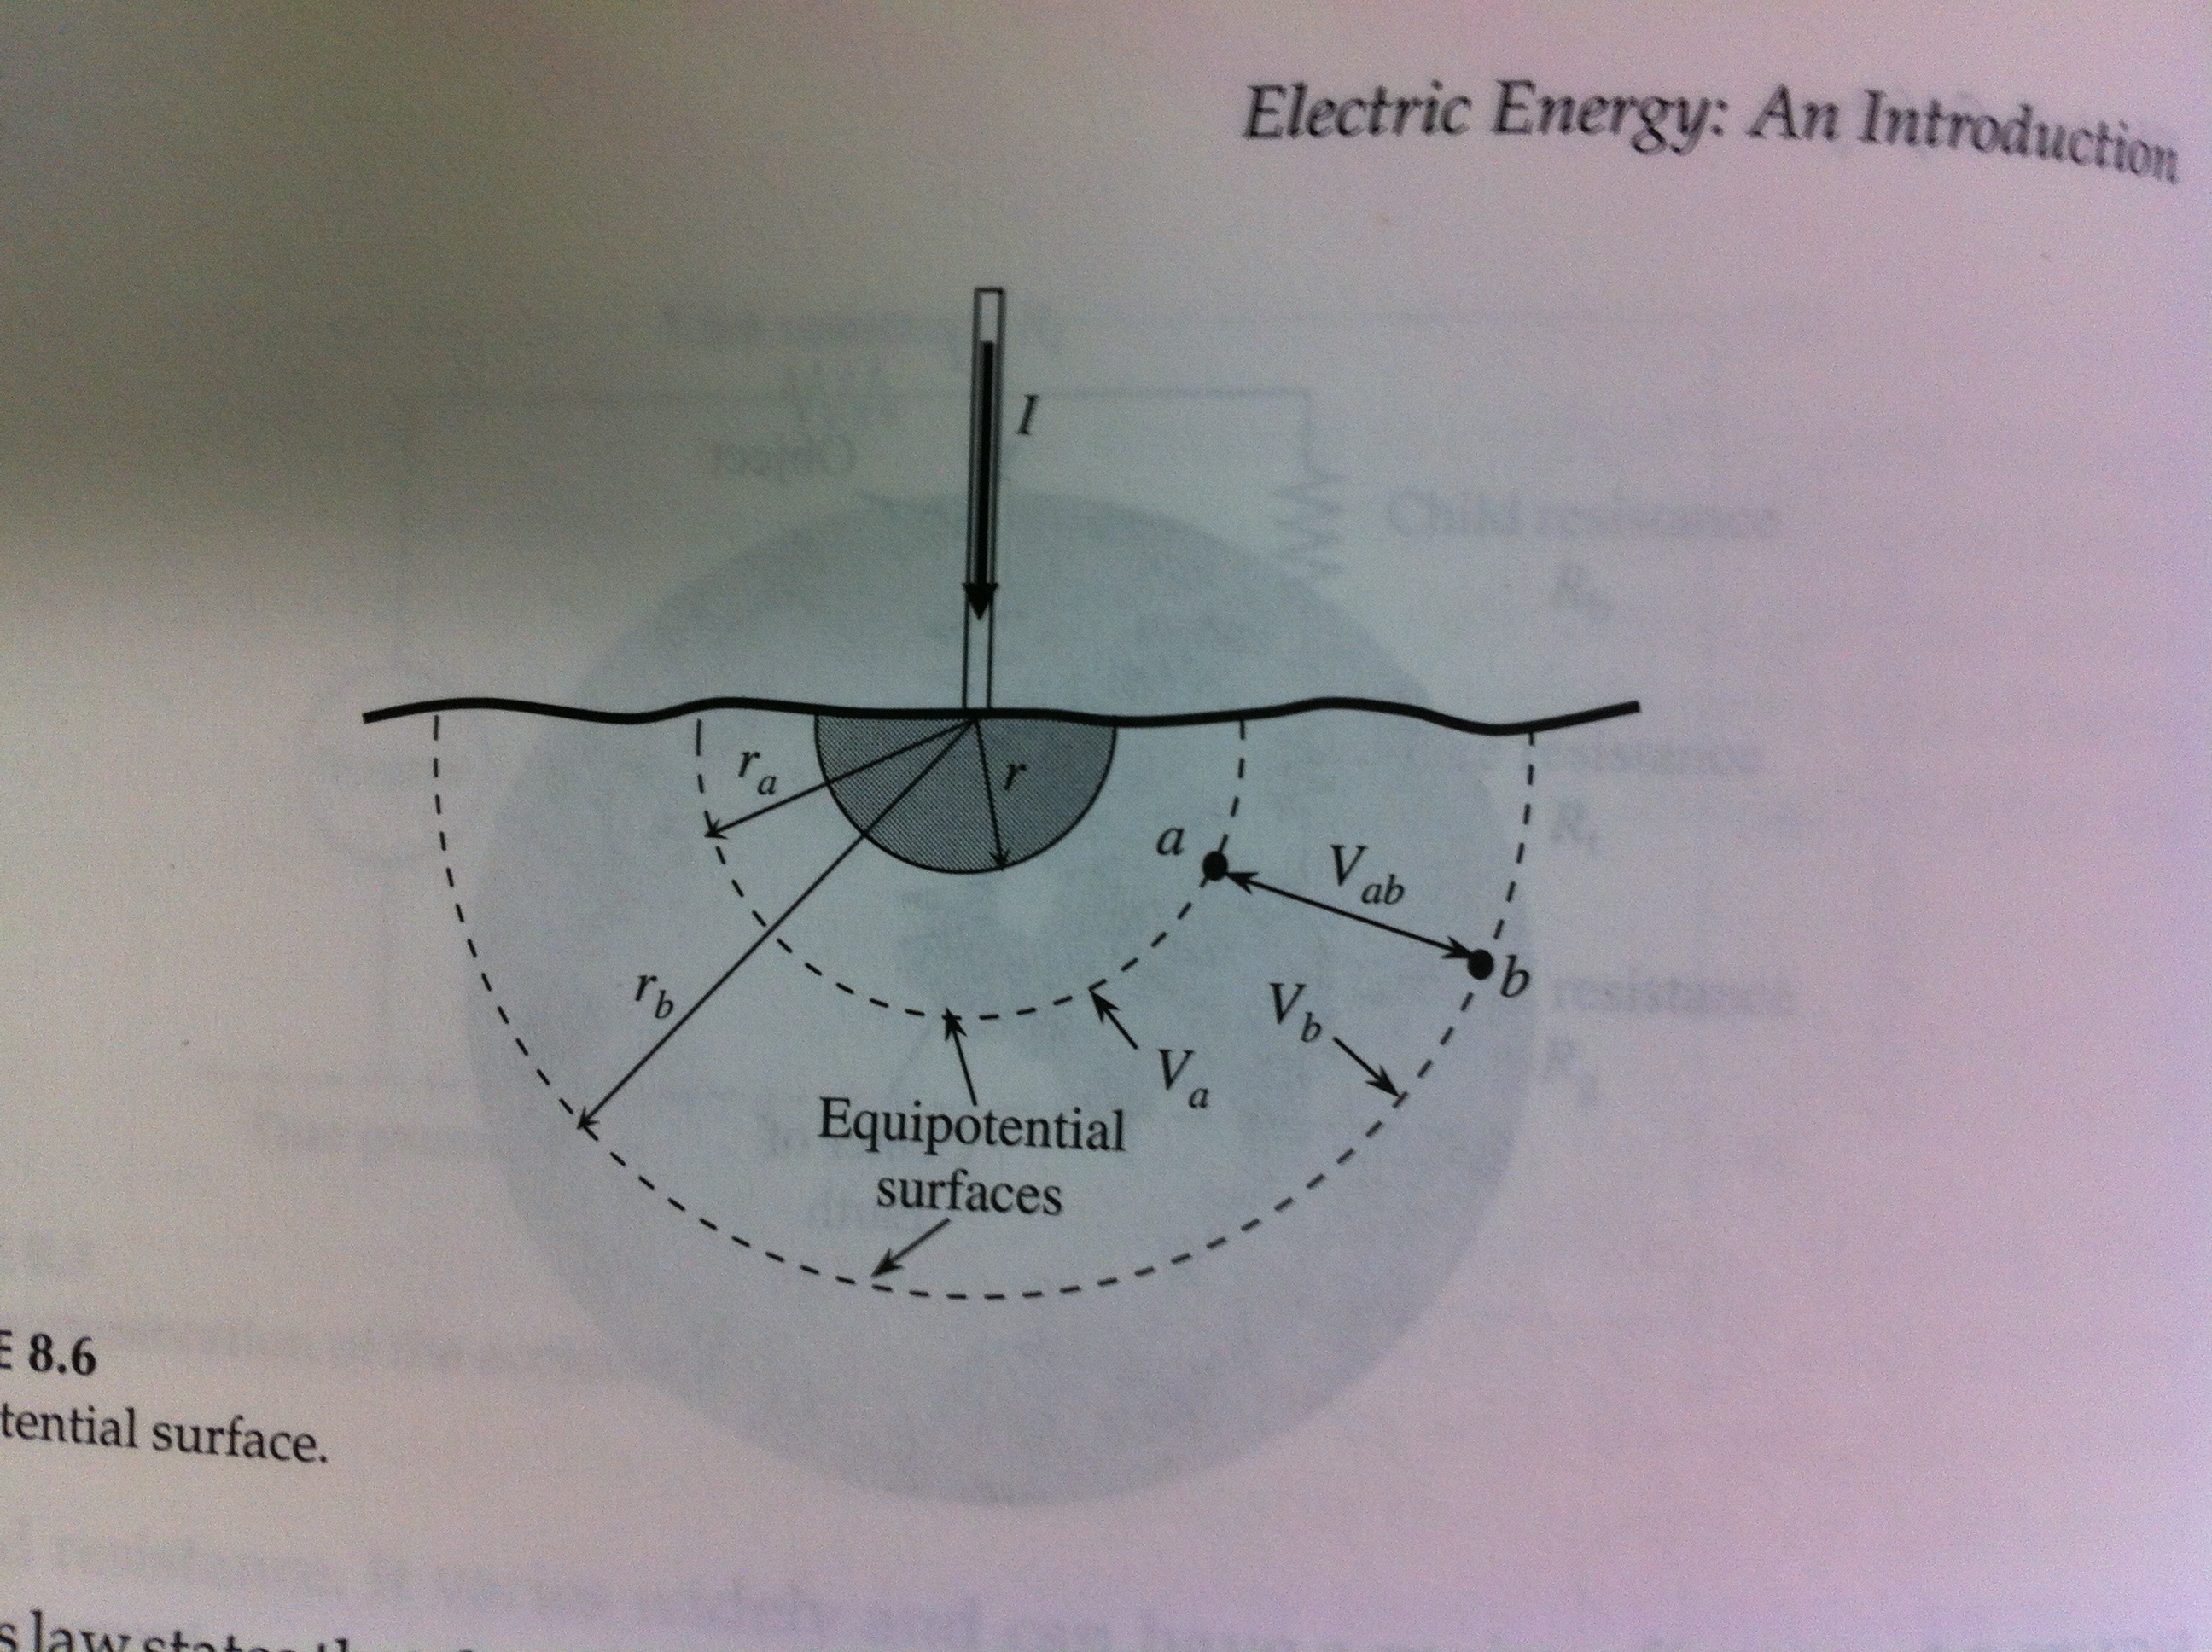 Source: El-Sharkawi, Electric Energy